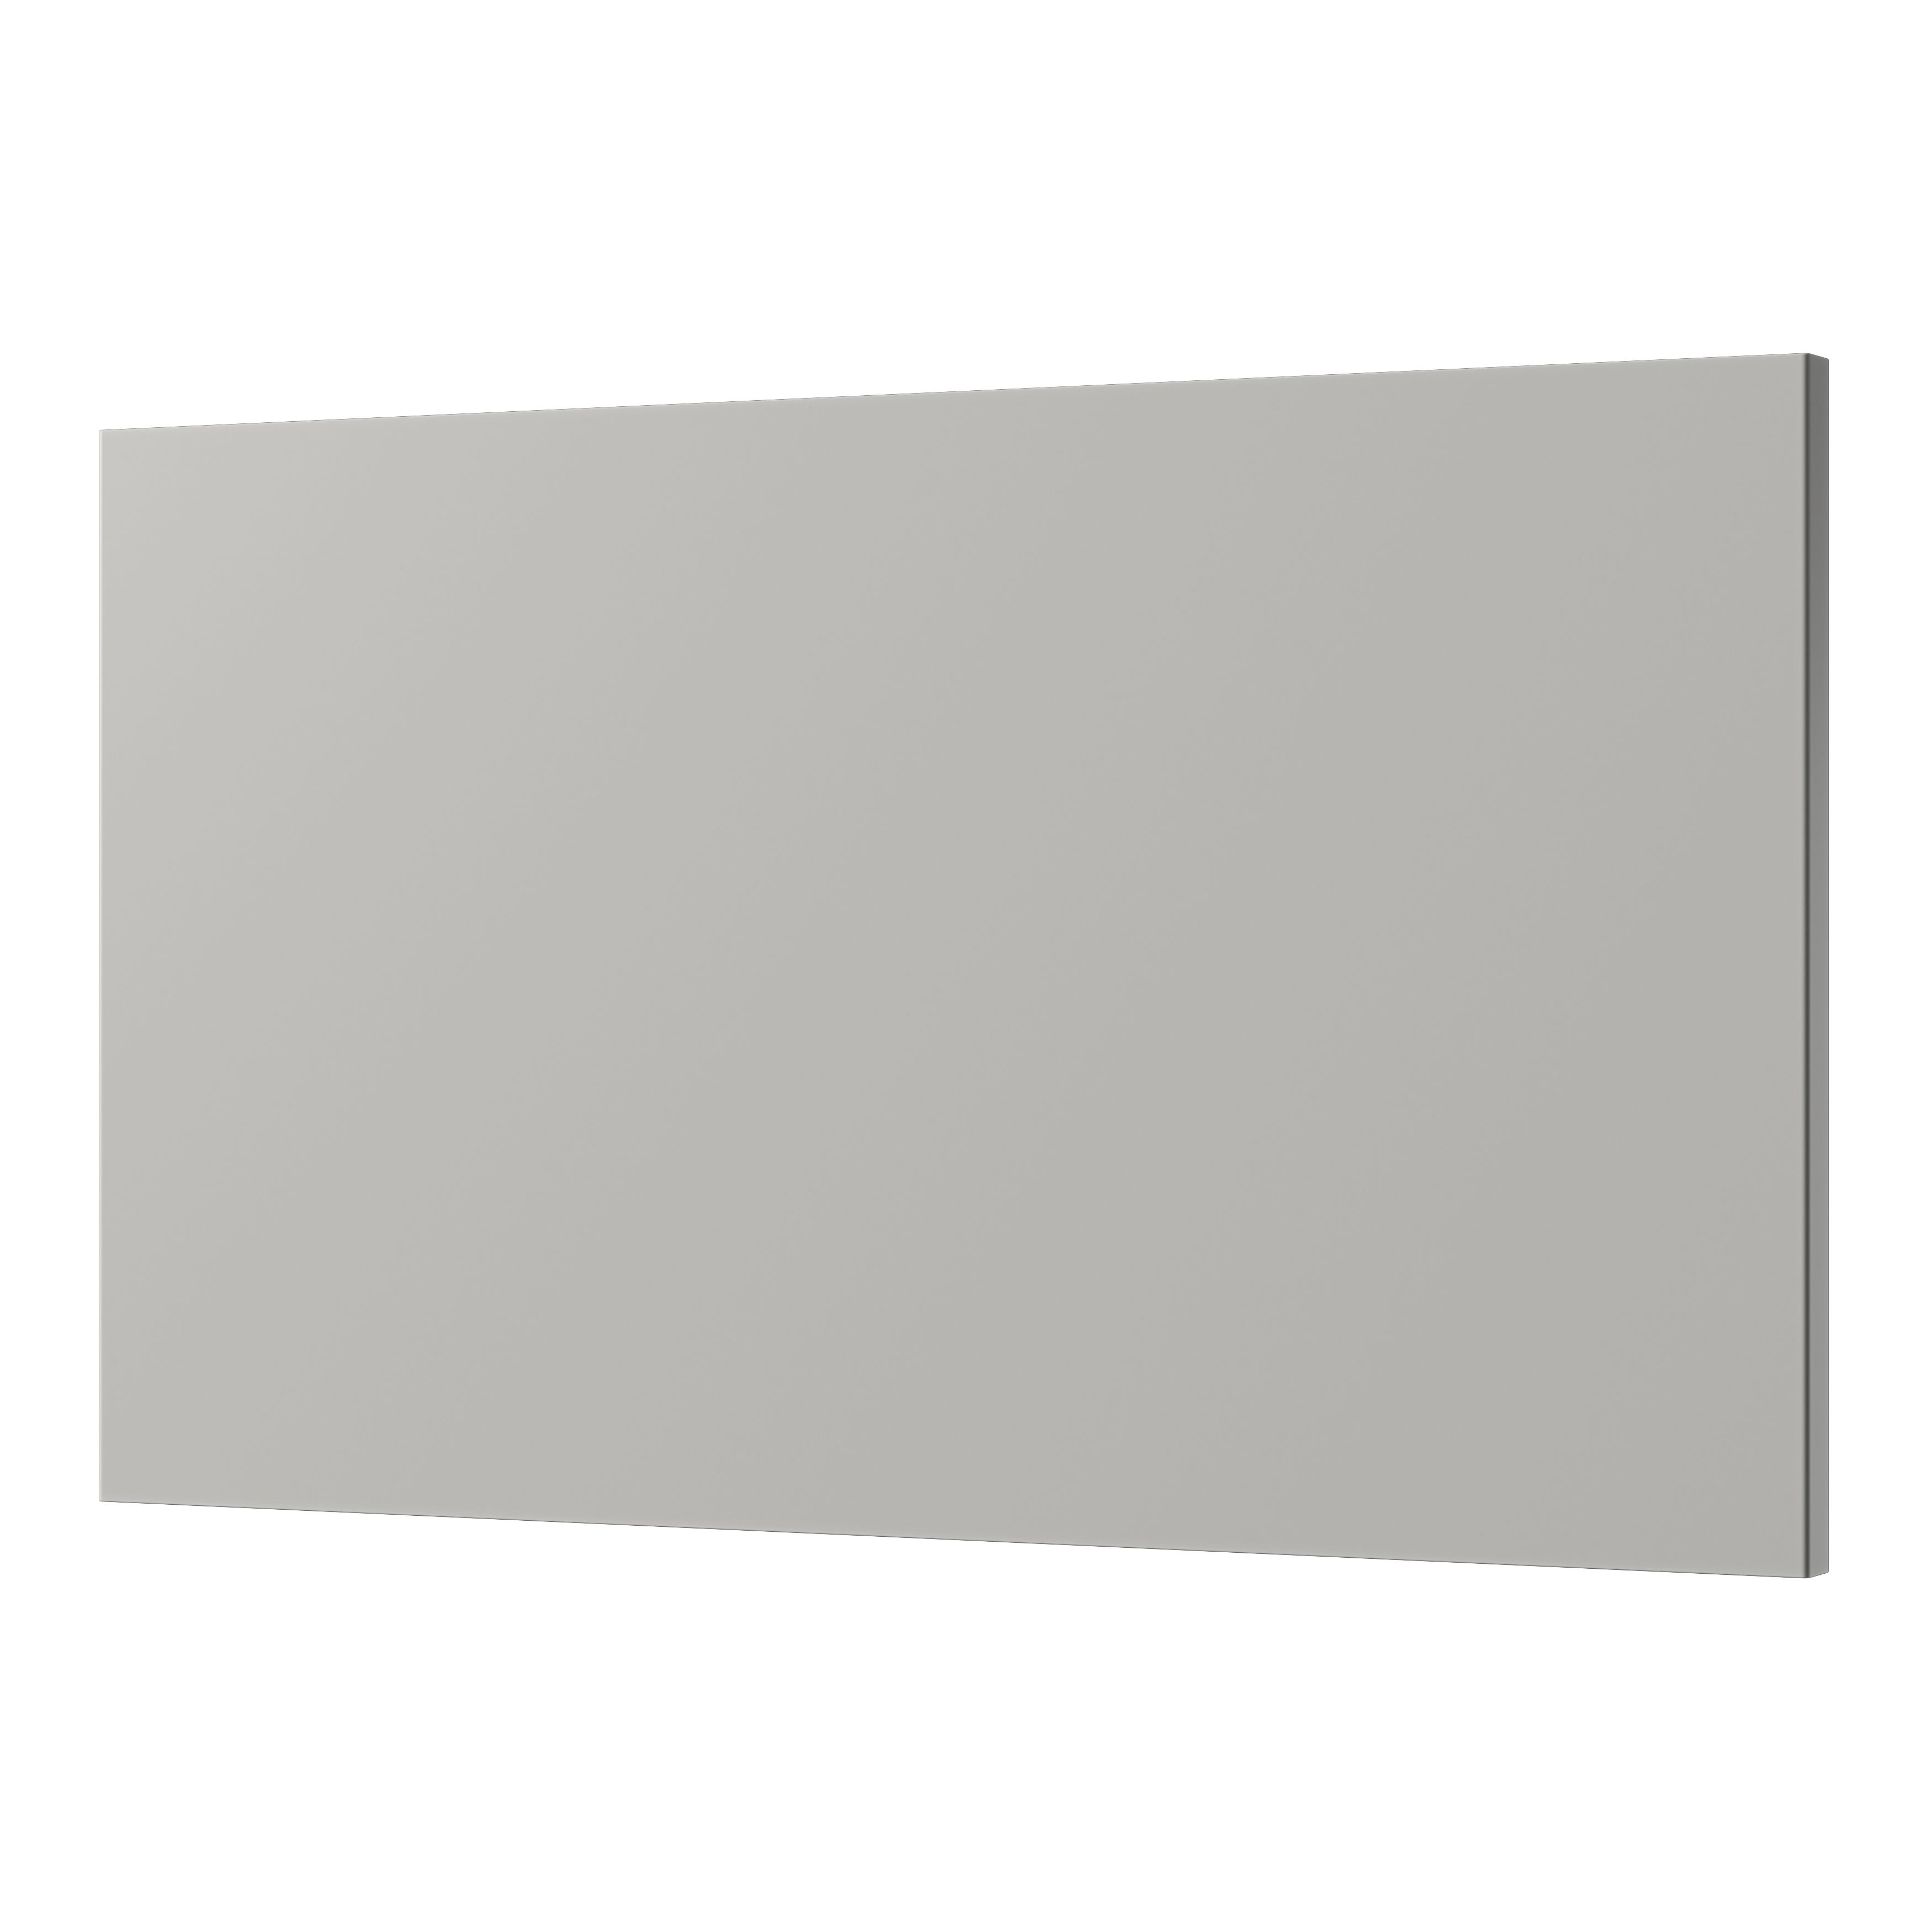 GoodHome Stevia Innovo handleless matt pewter grey slab Standard Drawer end panel (H)340mm (W)595mm